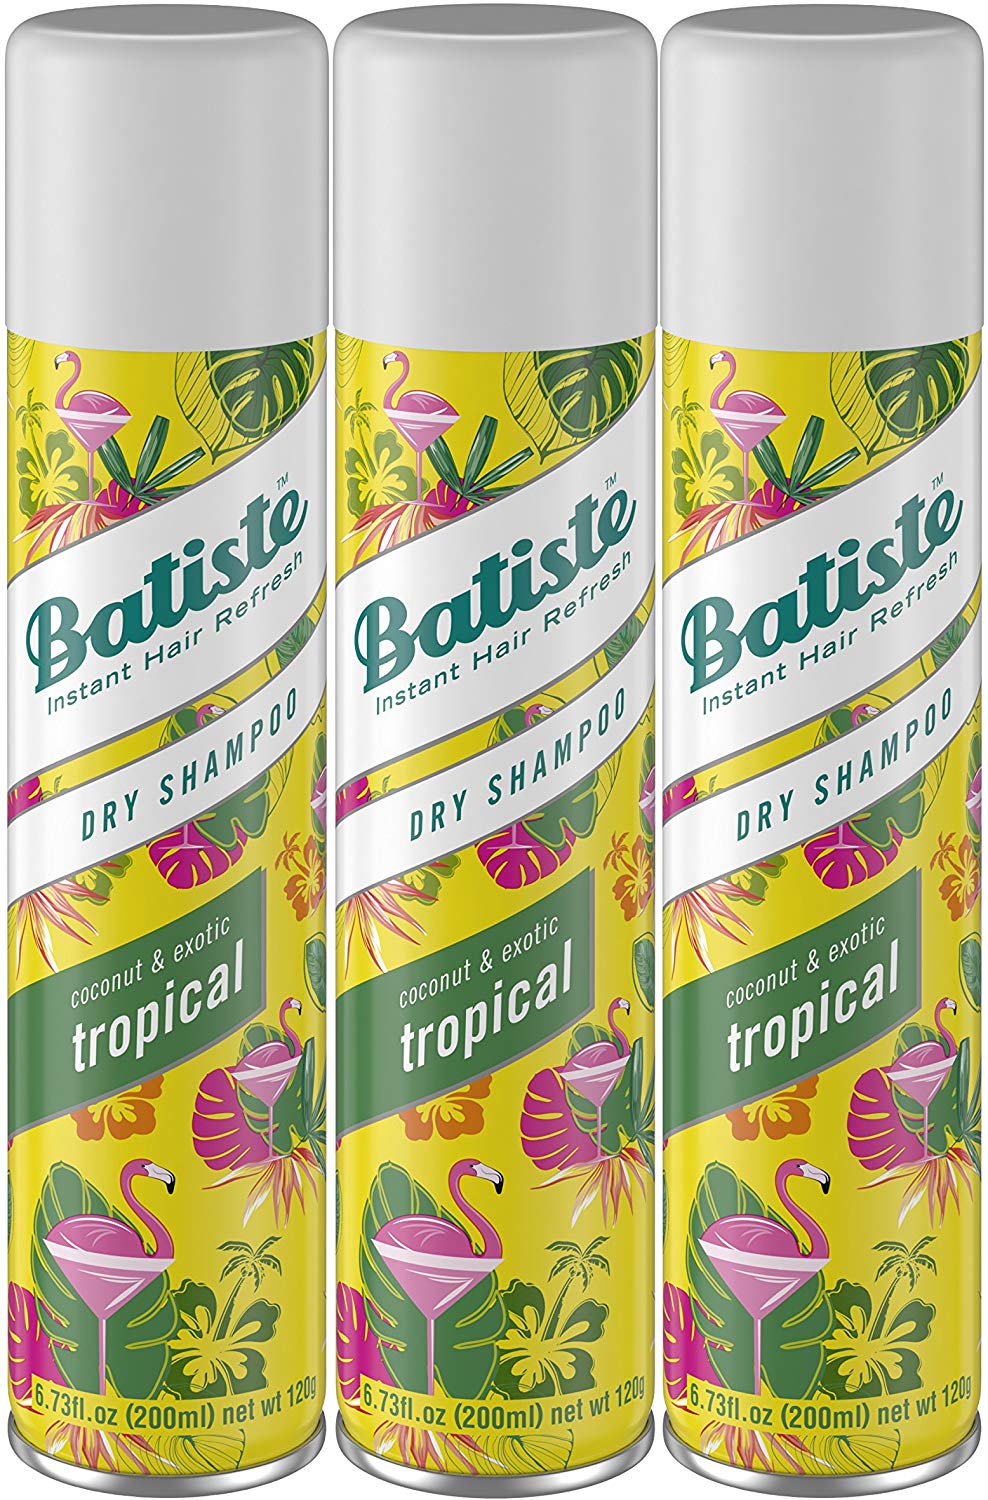 Batiste Dry Shampoo Tropical Fragrance 6.73 Fl Oz Pack of 3